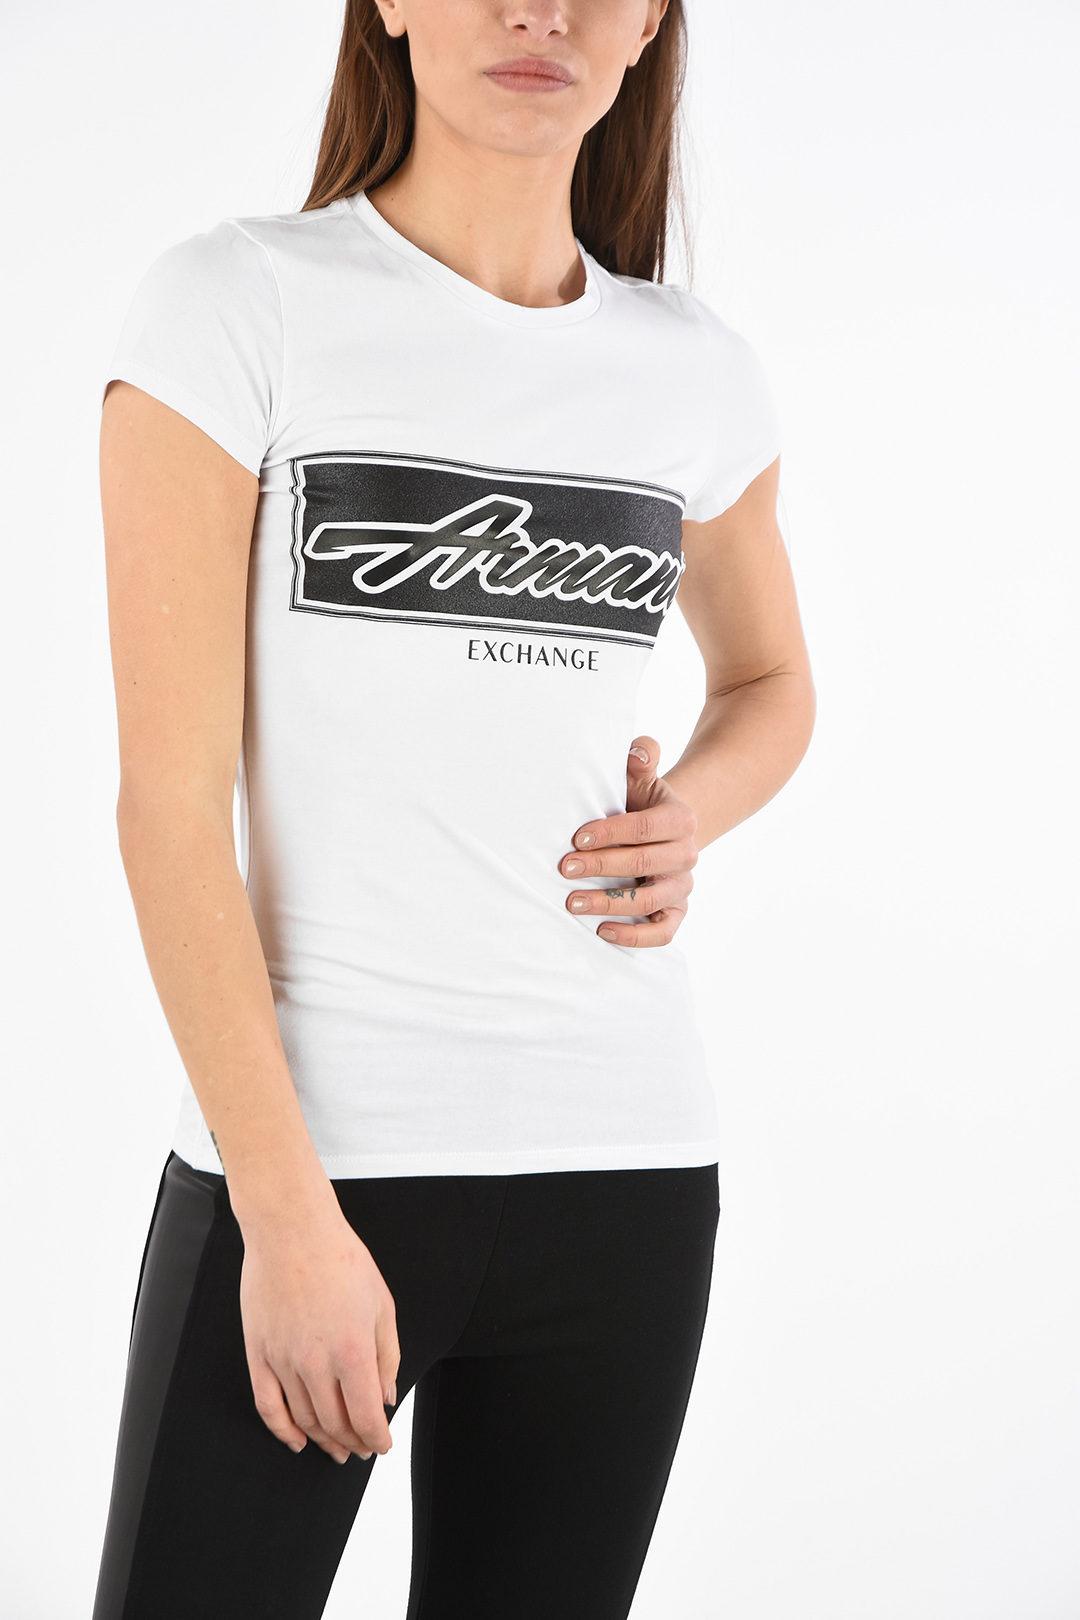 Armani ARMANI EXCHANGE Glitter Logo-Print T-shirt women - Glamood Outlet